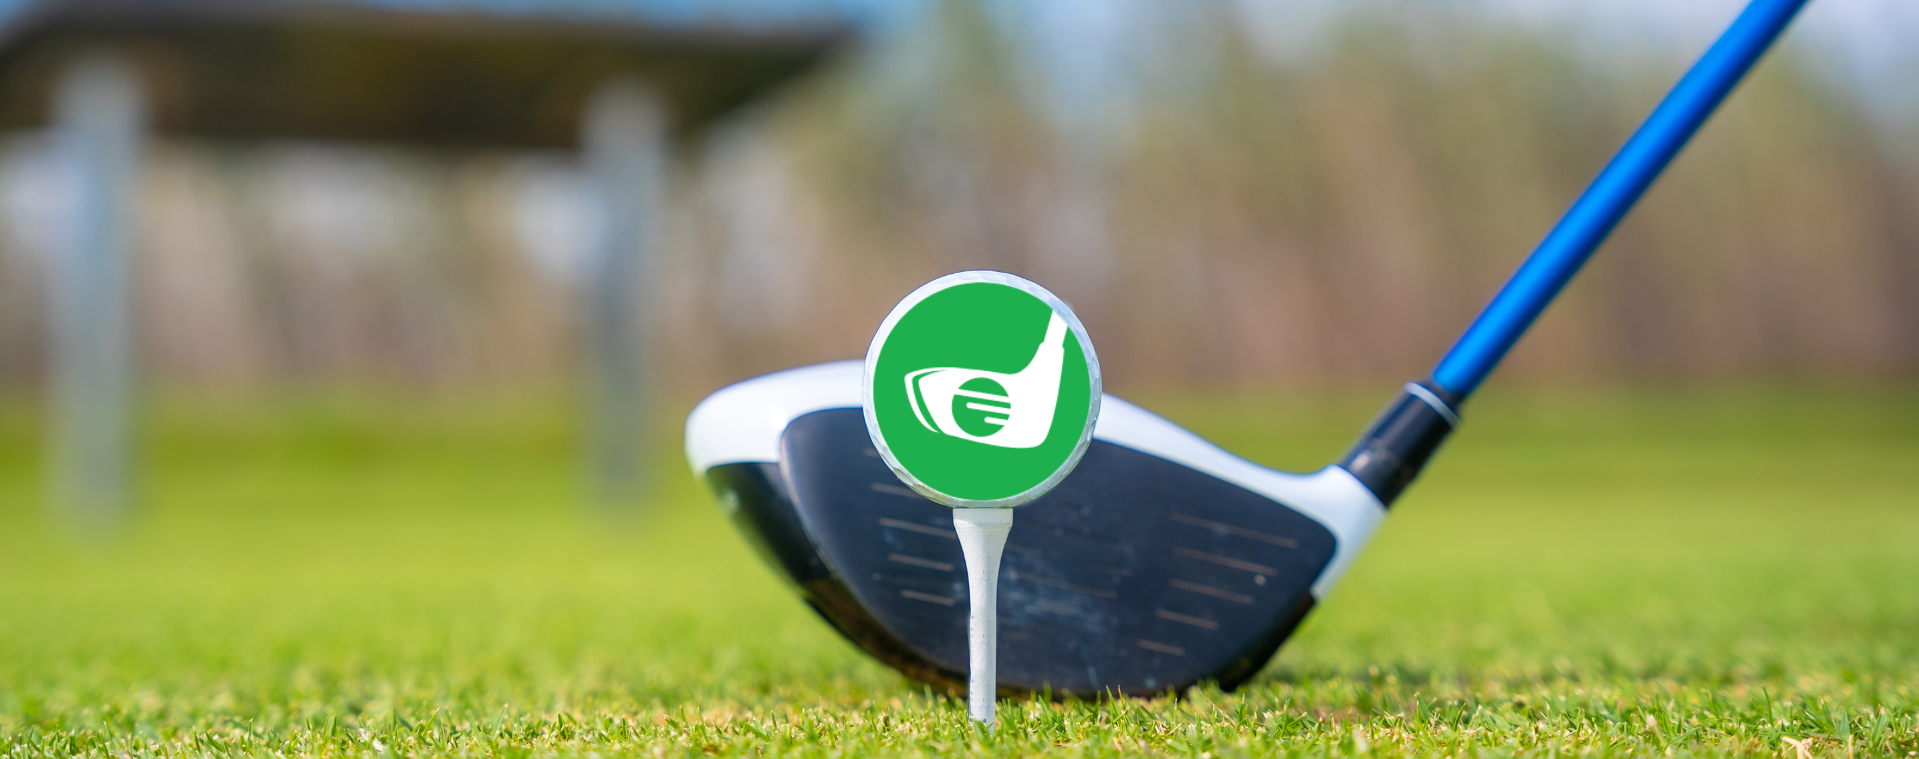 IoT - Golf simulator booking system development